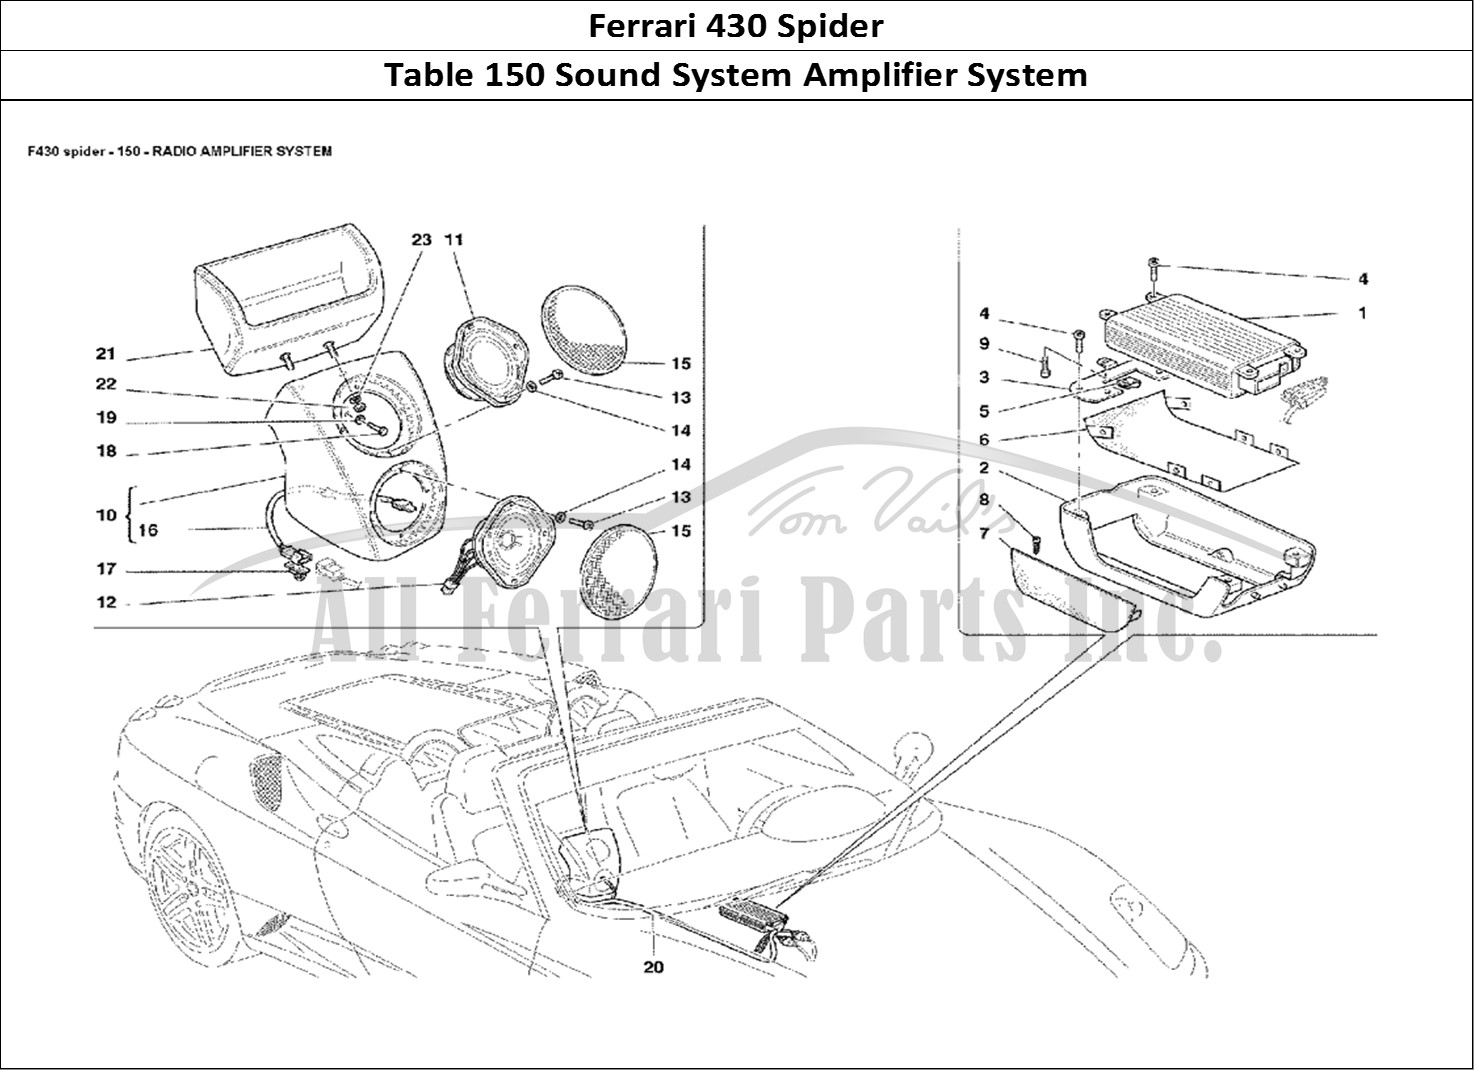 Ferrari Parts Ferrari 430 Spider Page 150 Radio Amplifier System